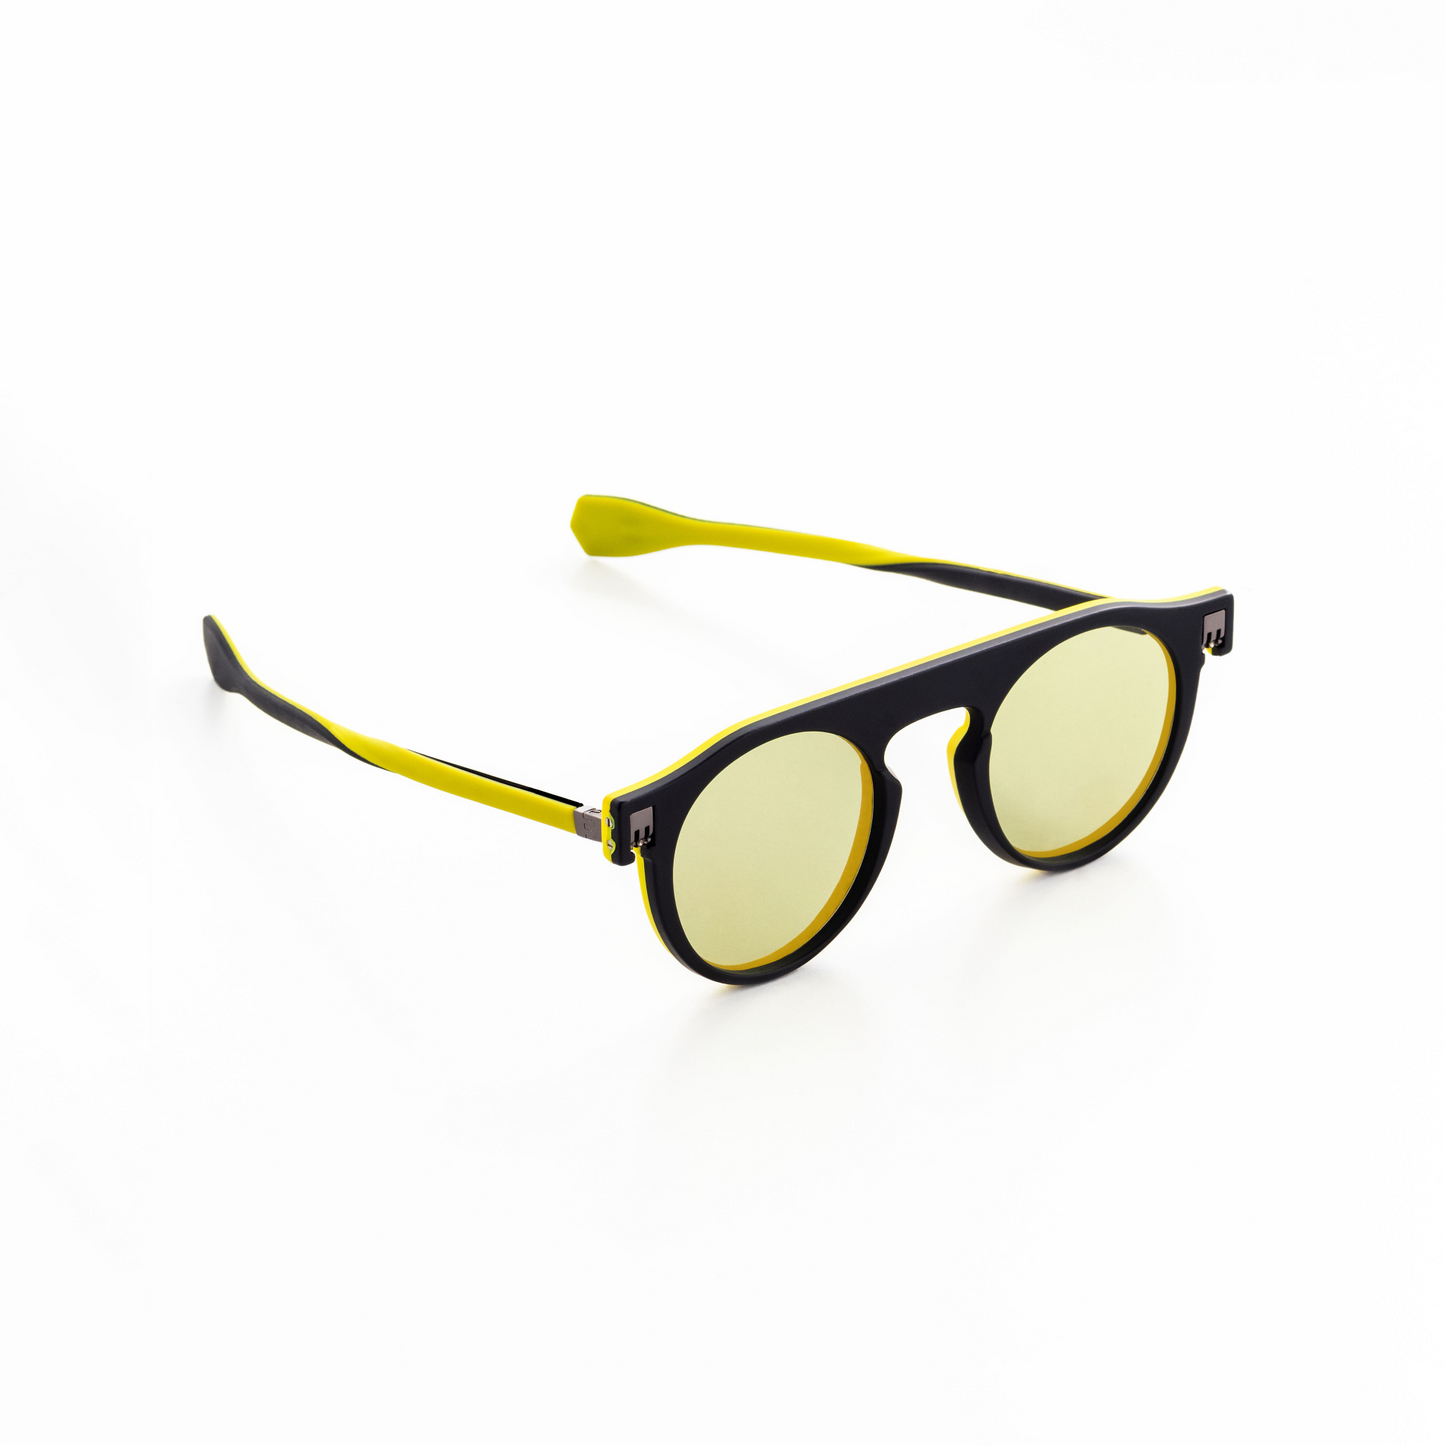 Reverso sunglasses black & yellow reversible & ultra light side view 2